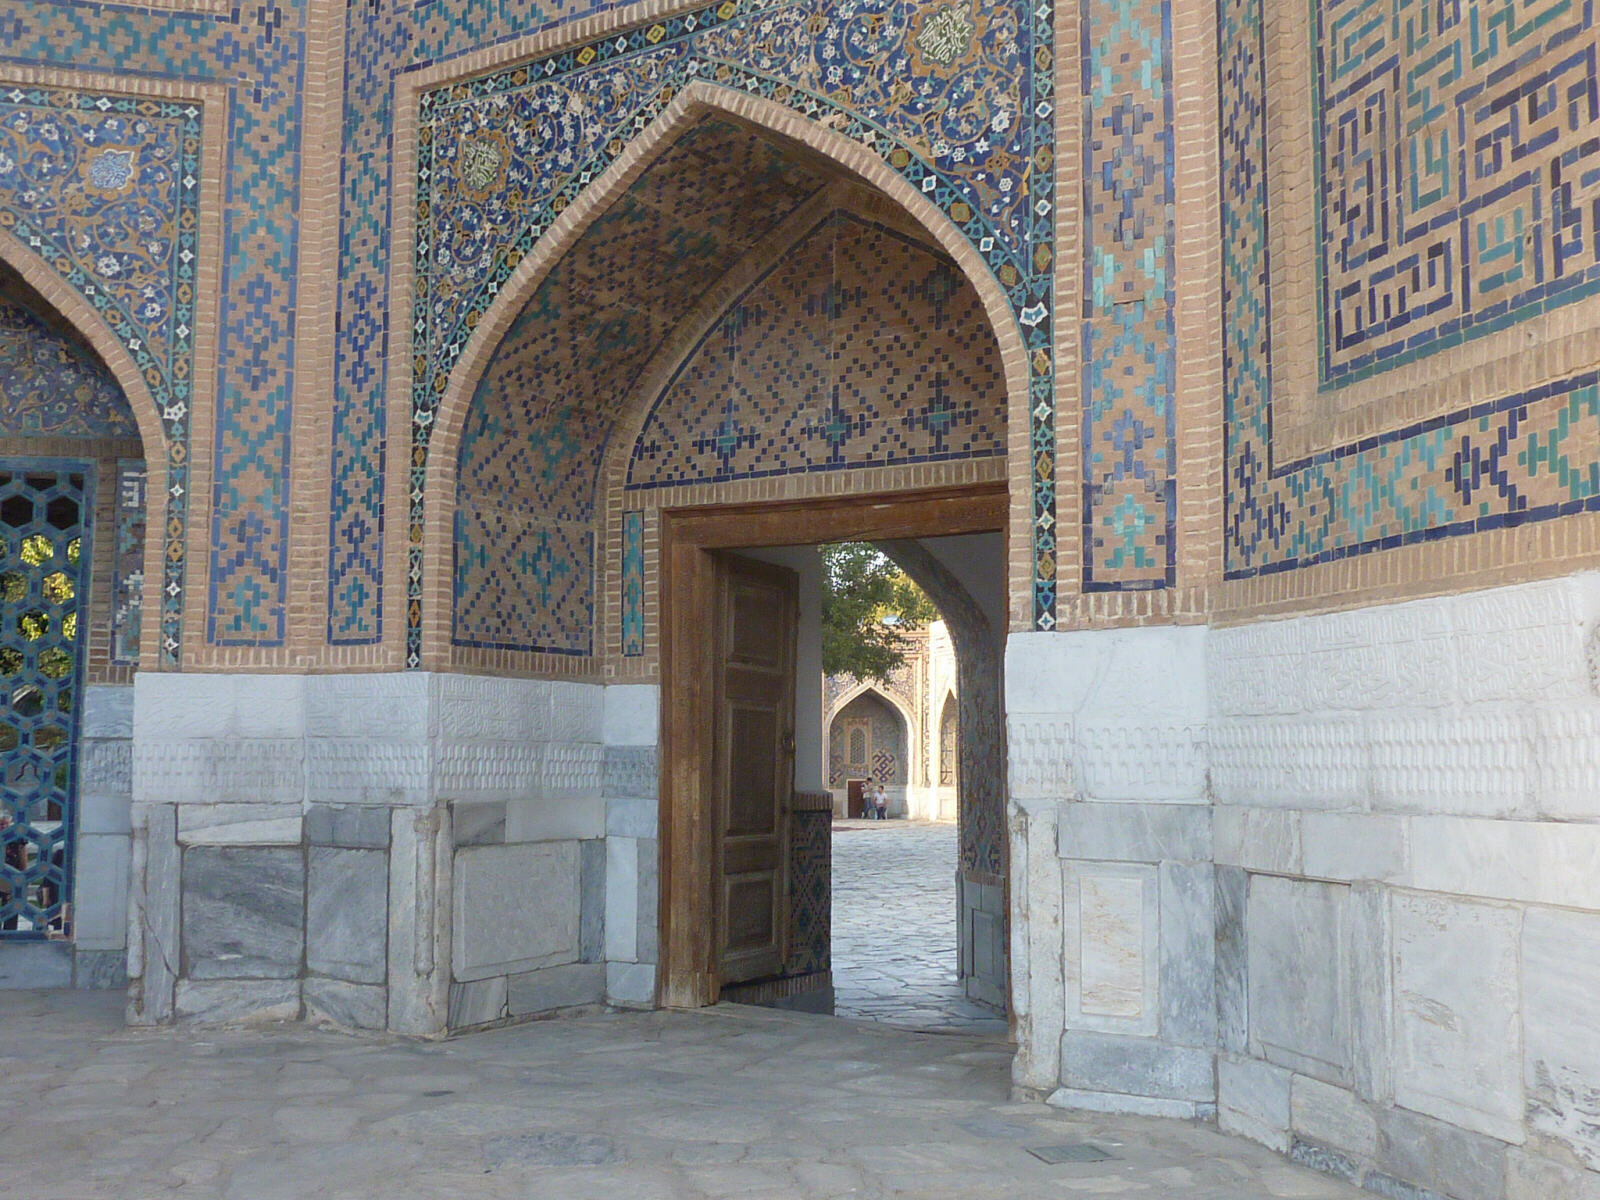 An arched doorway in the Registan, Samarkand, Uzbekistan